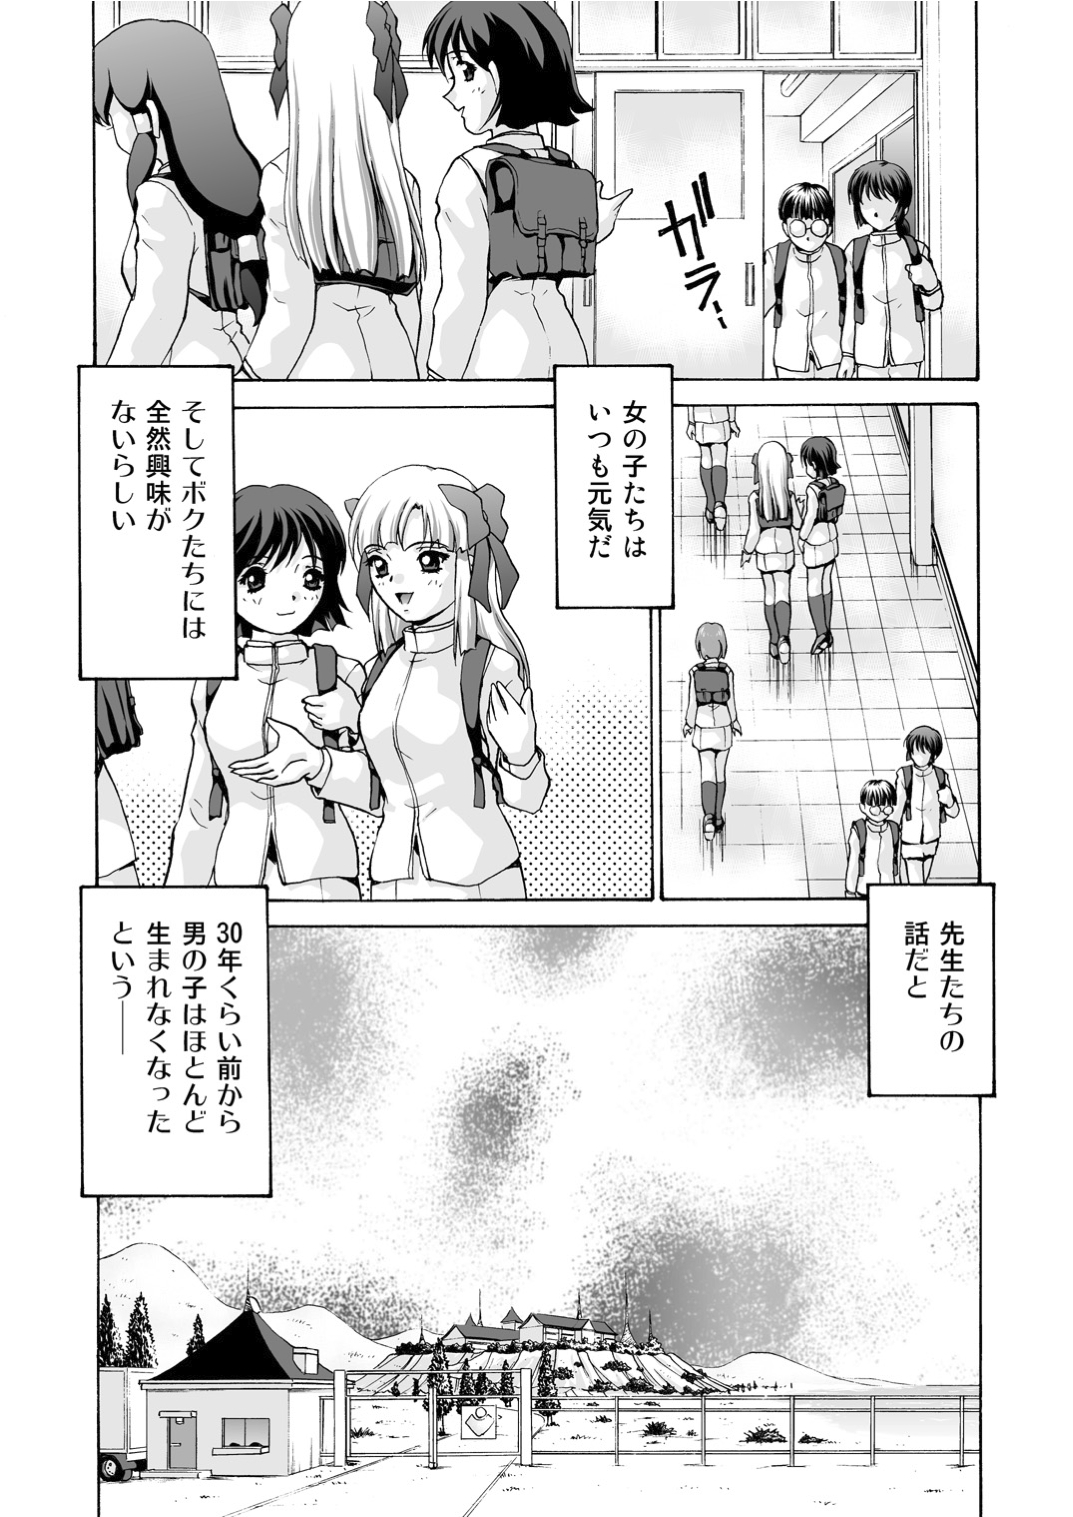 [M-trinity (きゃらめる堂)] モンスター・エイジ 03 An Injection of Miss Mamiko